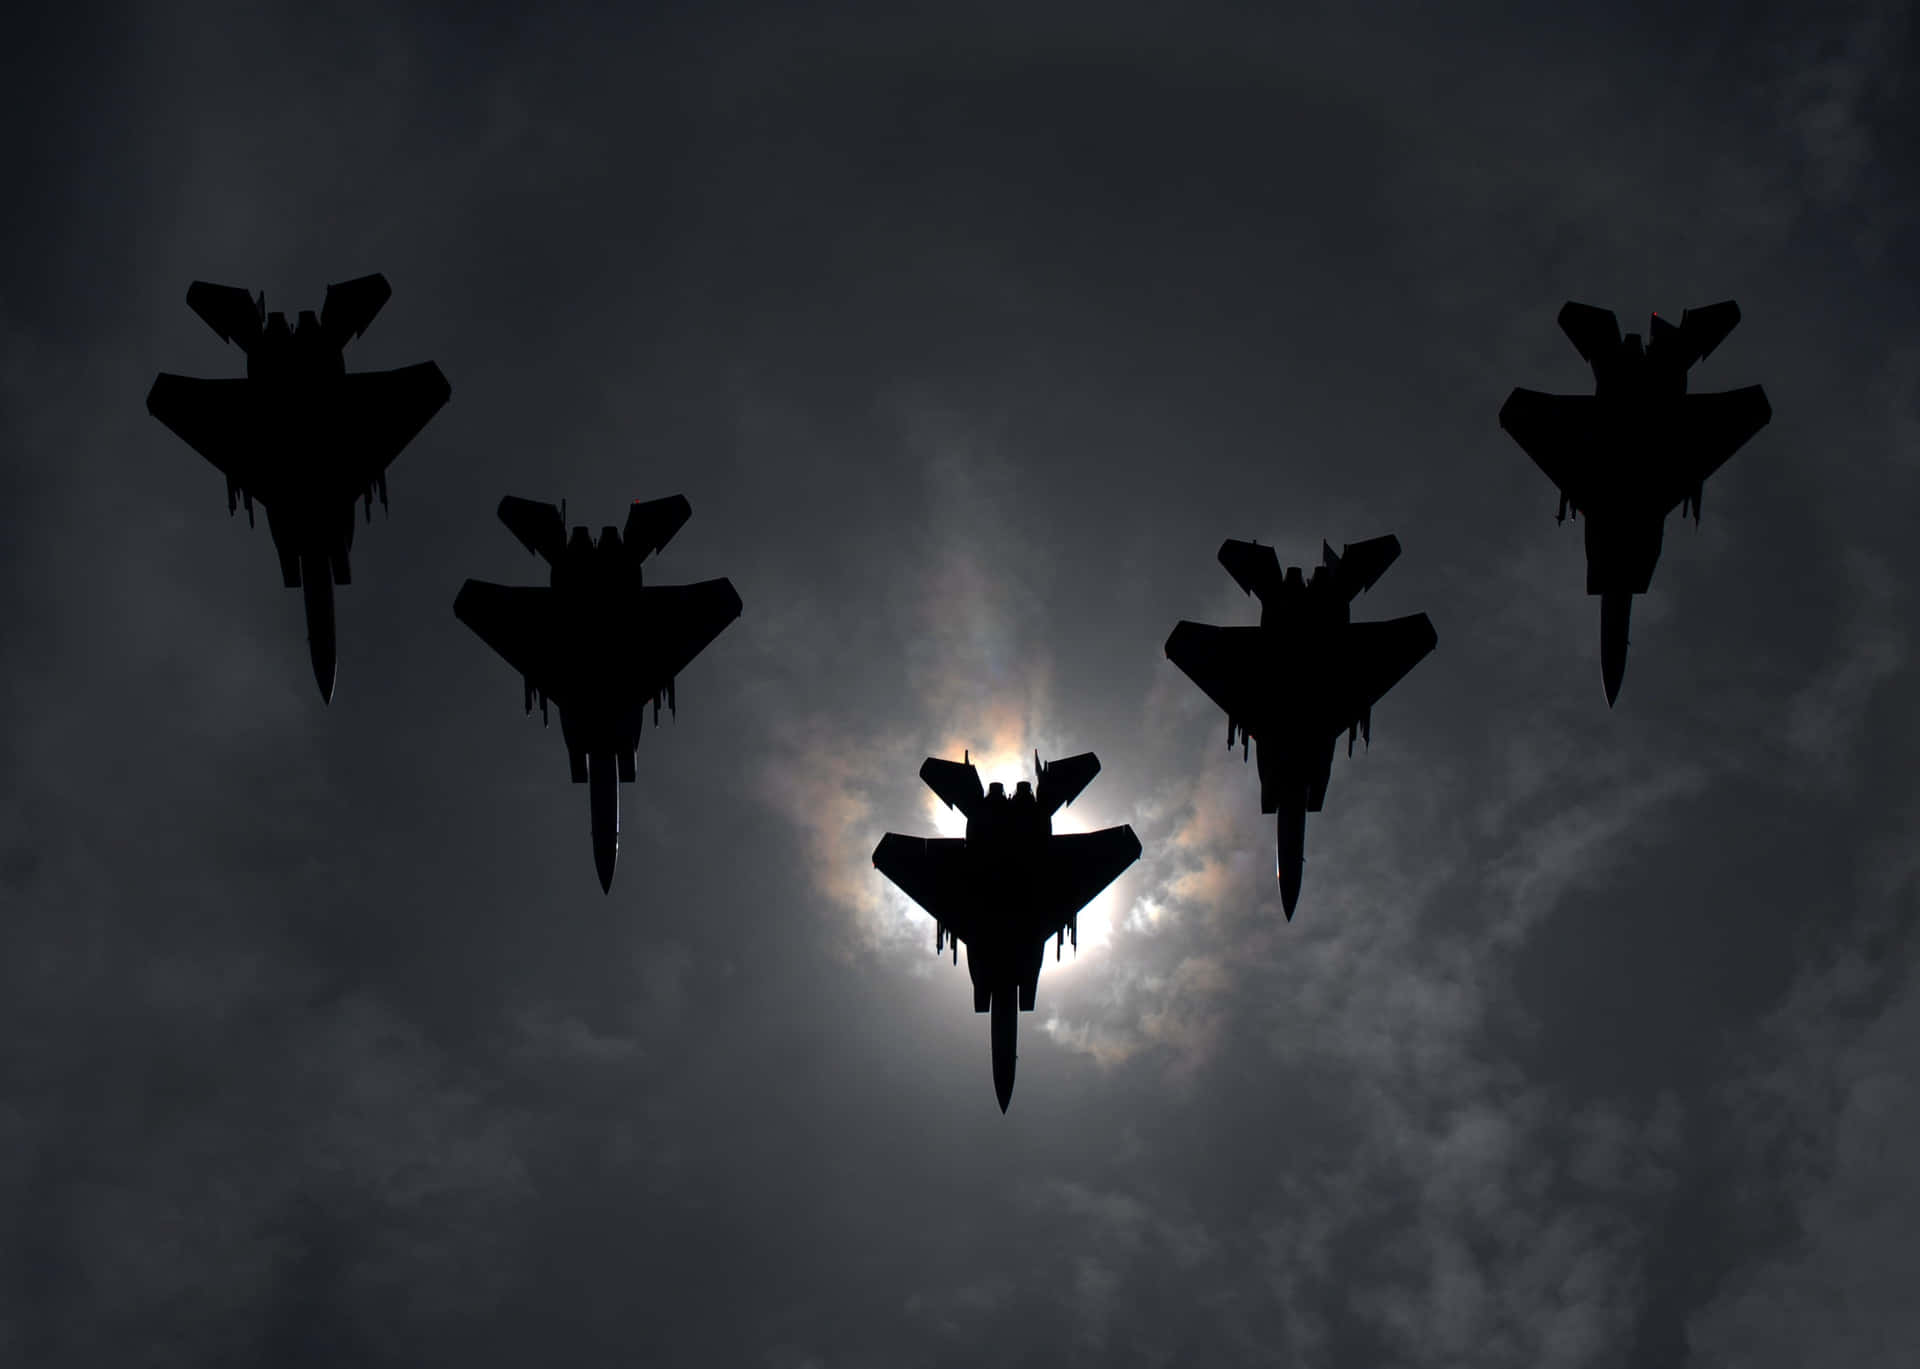 Military aircraft soaring through the skies